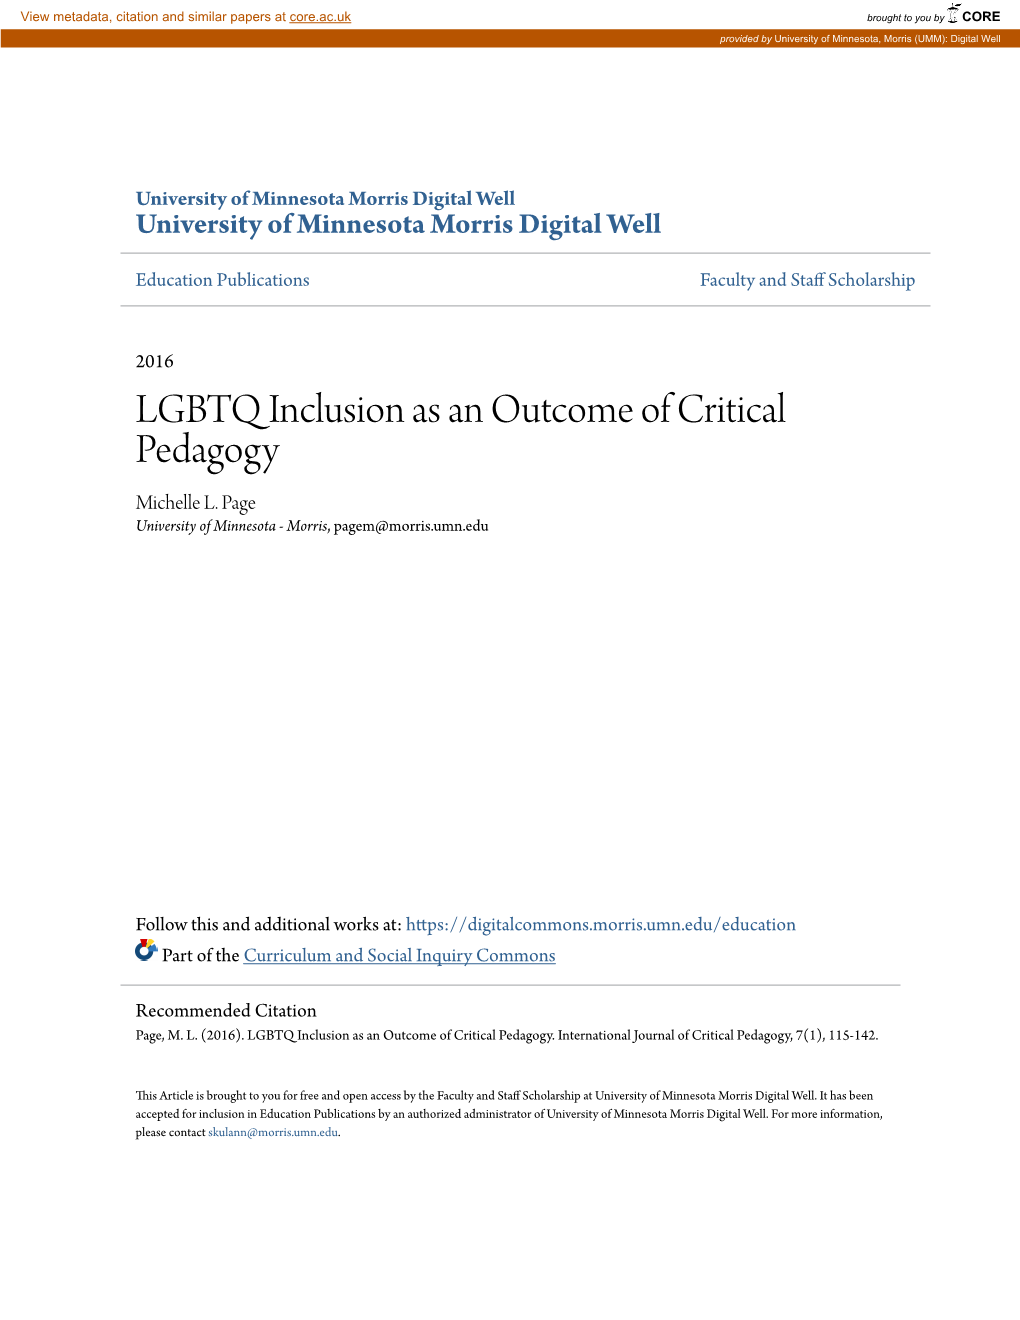 LGBTQ Inclusion As an Outcome of Critical Pedagogy Michelle L